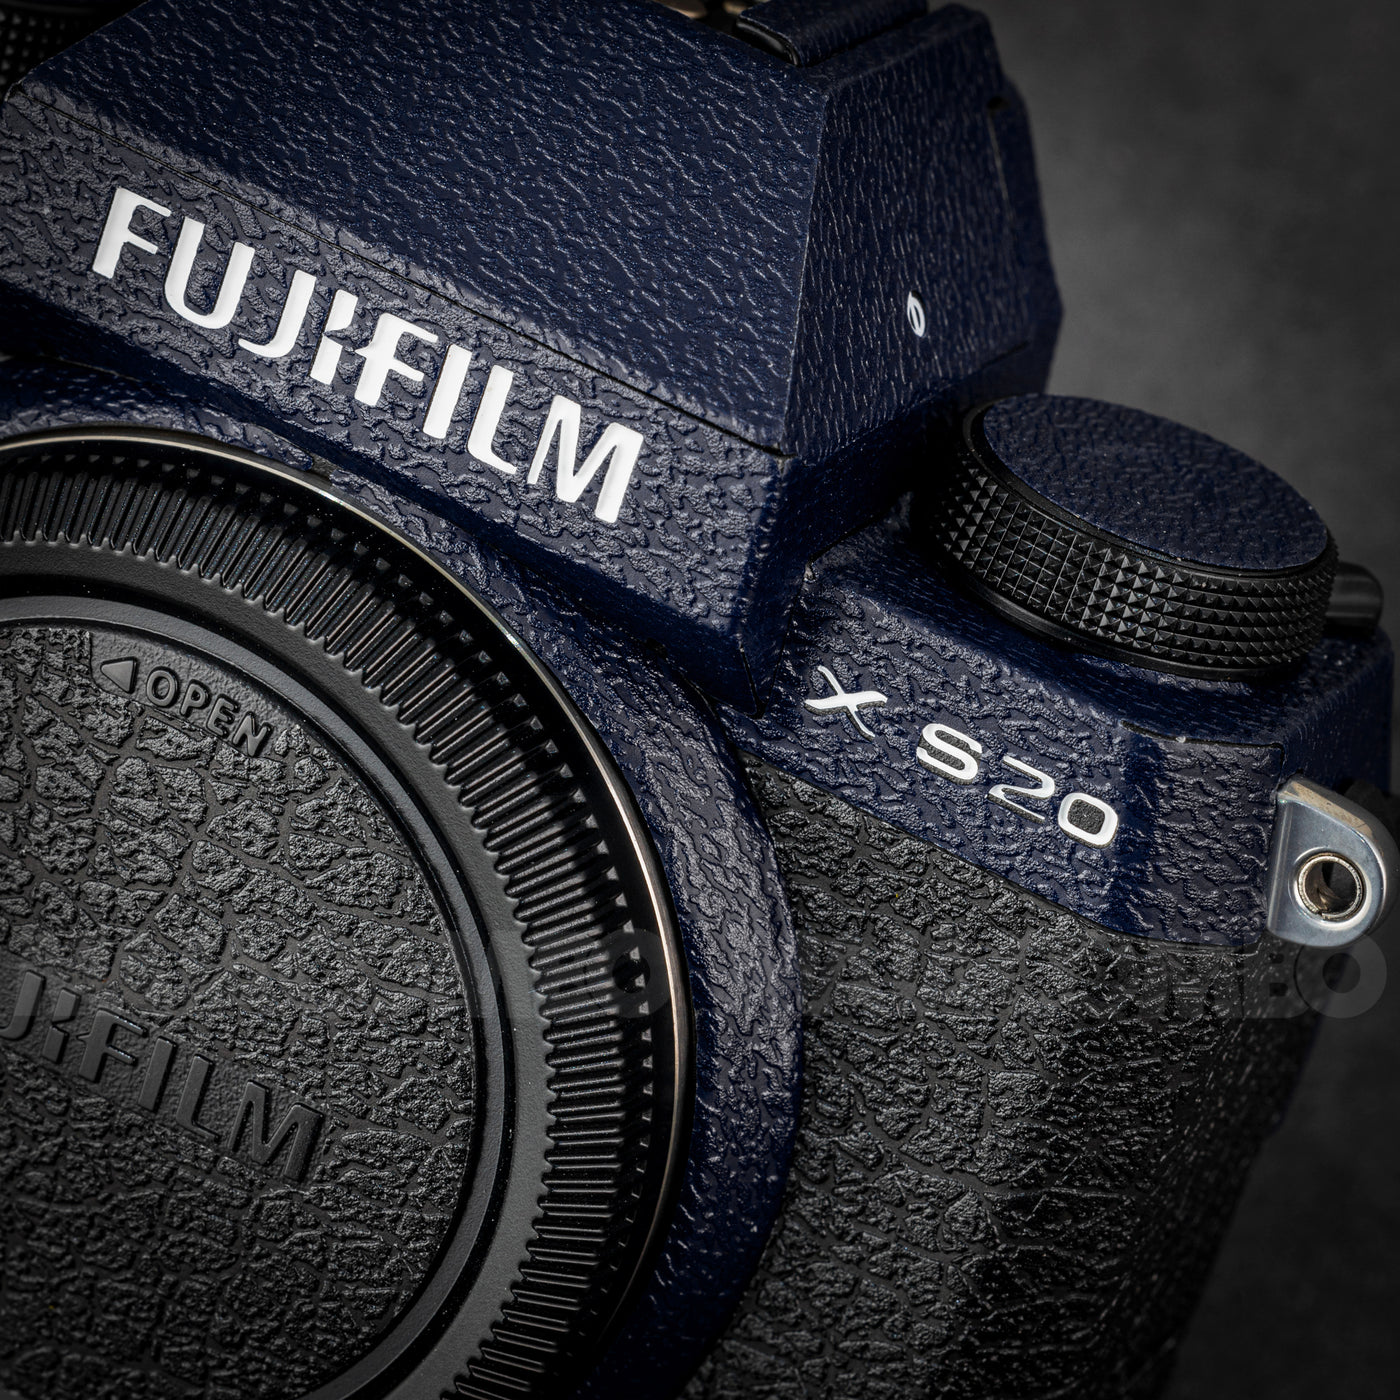 Fujifilm X-S20 Camera Skin/ Wrap